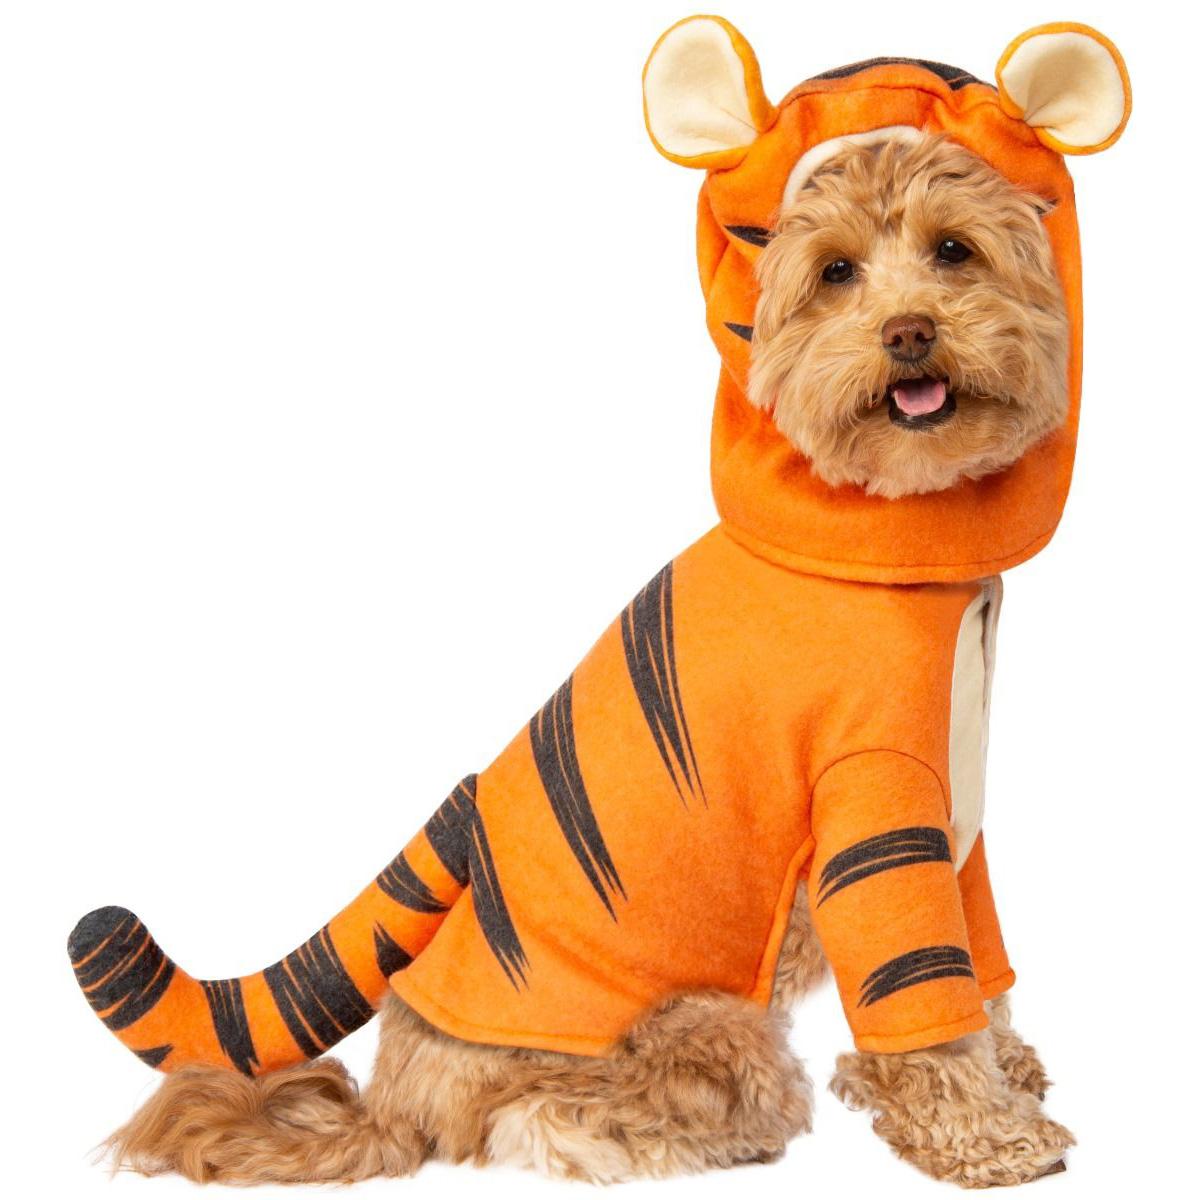 Winnie The Pooh Tigger Dog Costume by Rubies